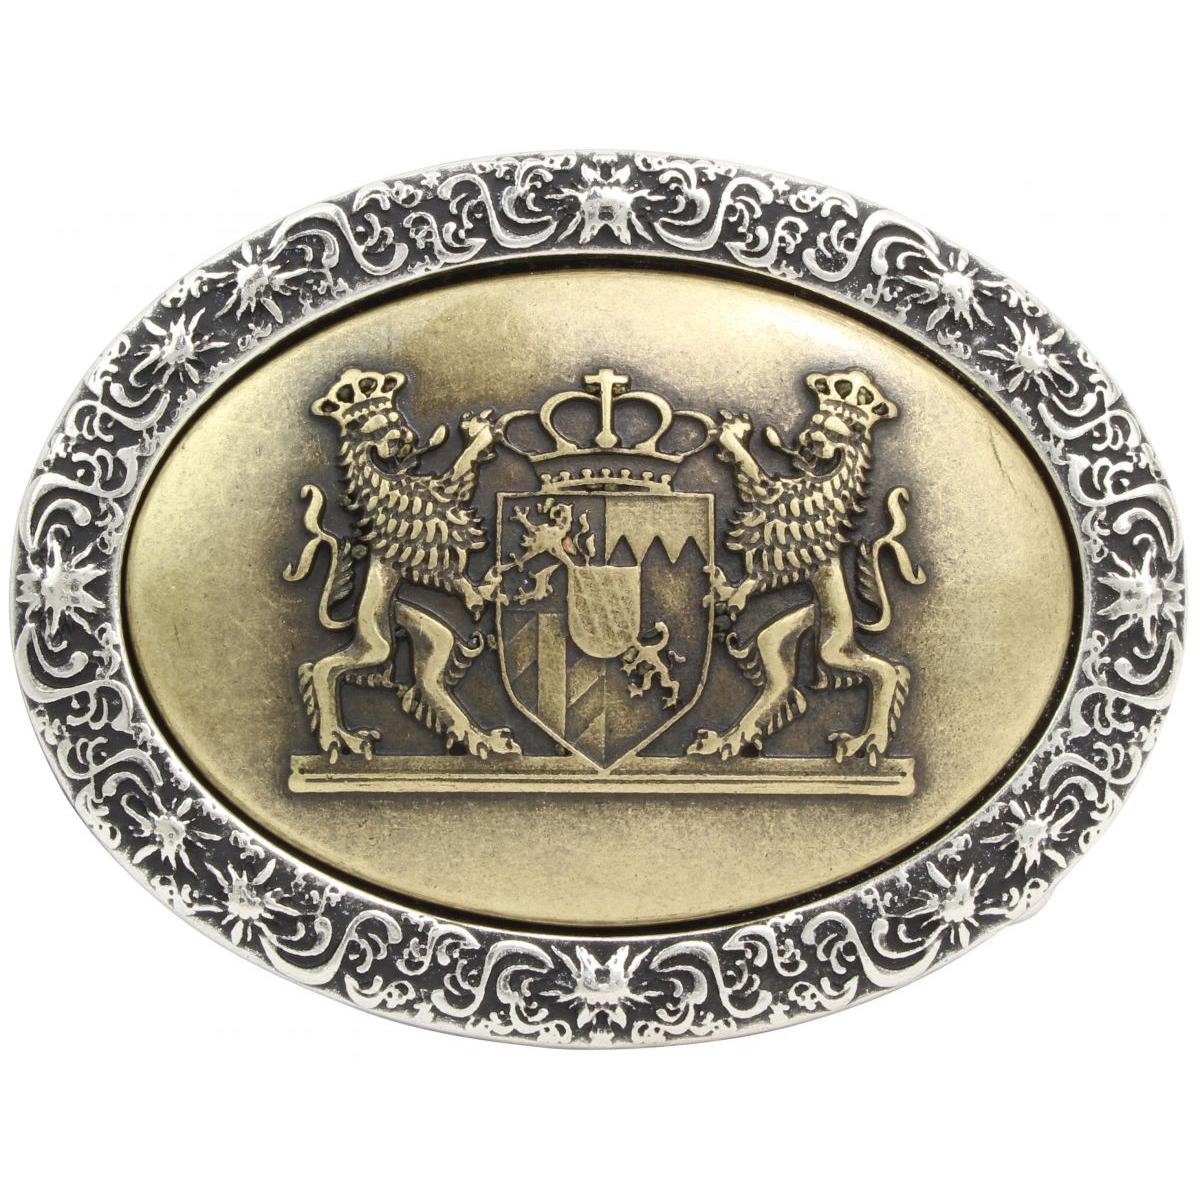 BELTINGER Gürtelschnalle Wappen Bayern 4,0 cm - Buckle Wechselschließe Gürtelschließe 40mm - Fü bicolor s/g | Gürtelschnallen